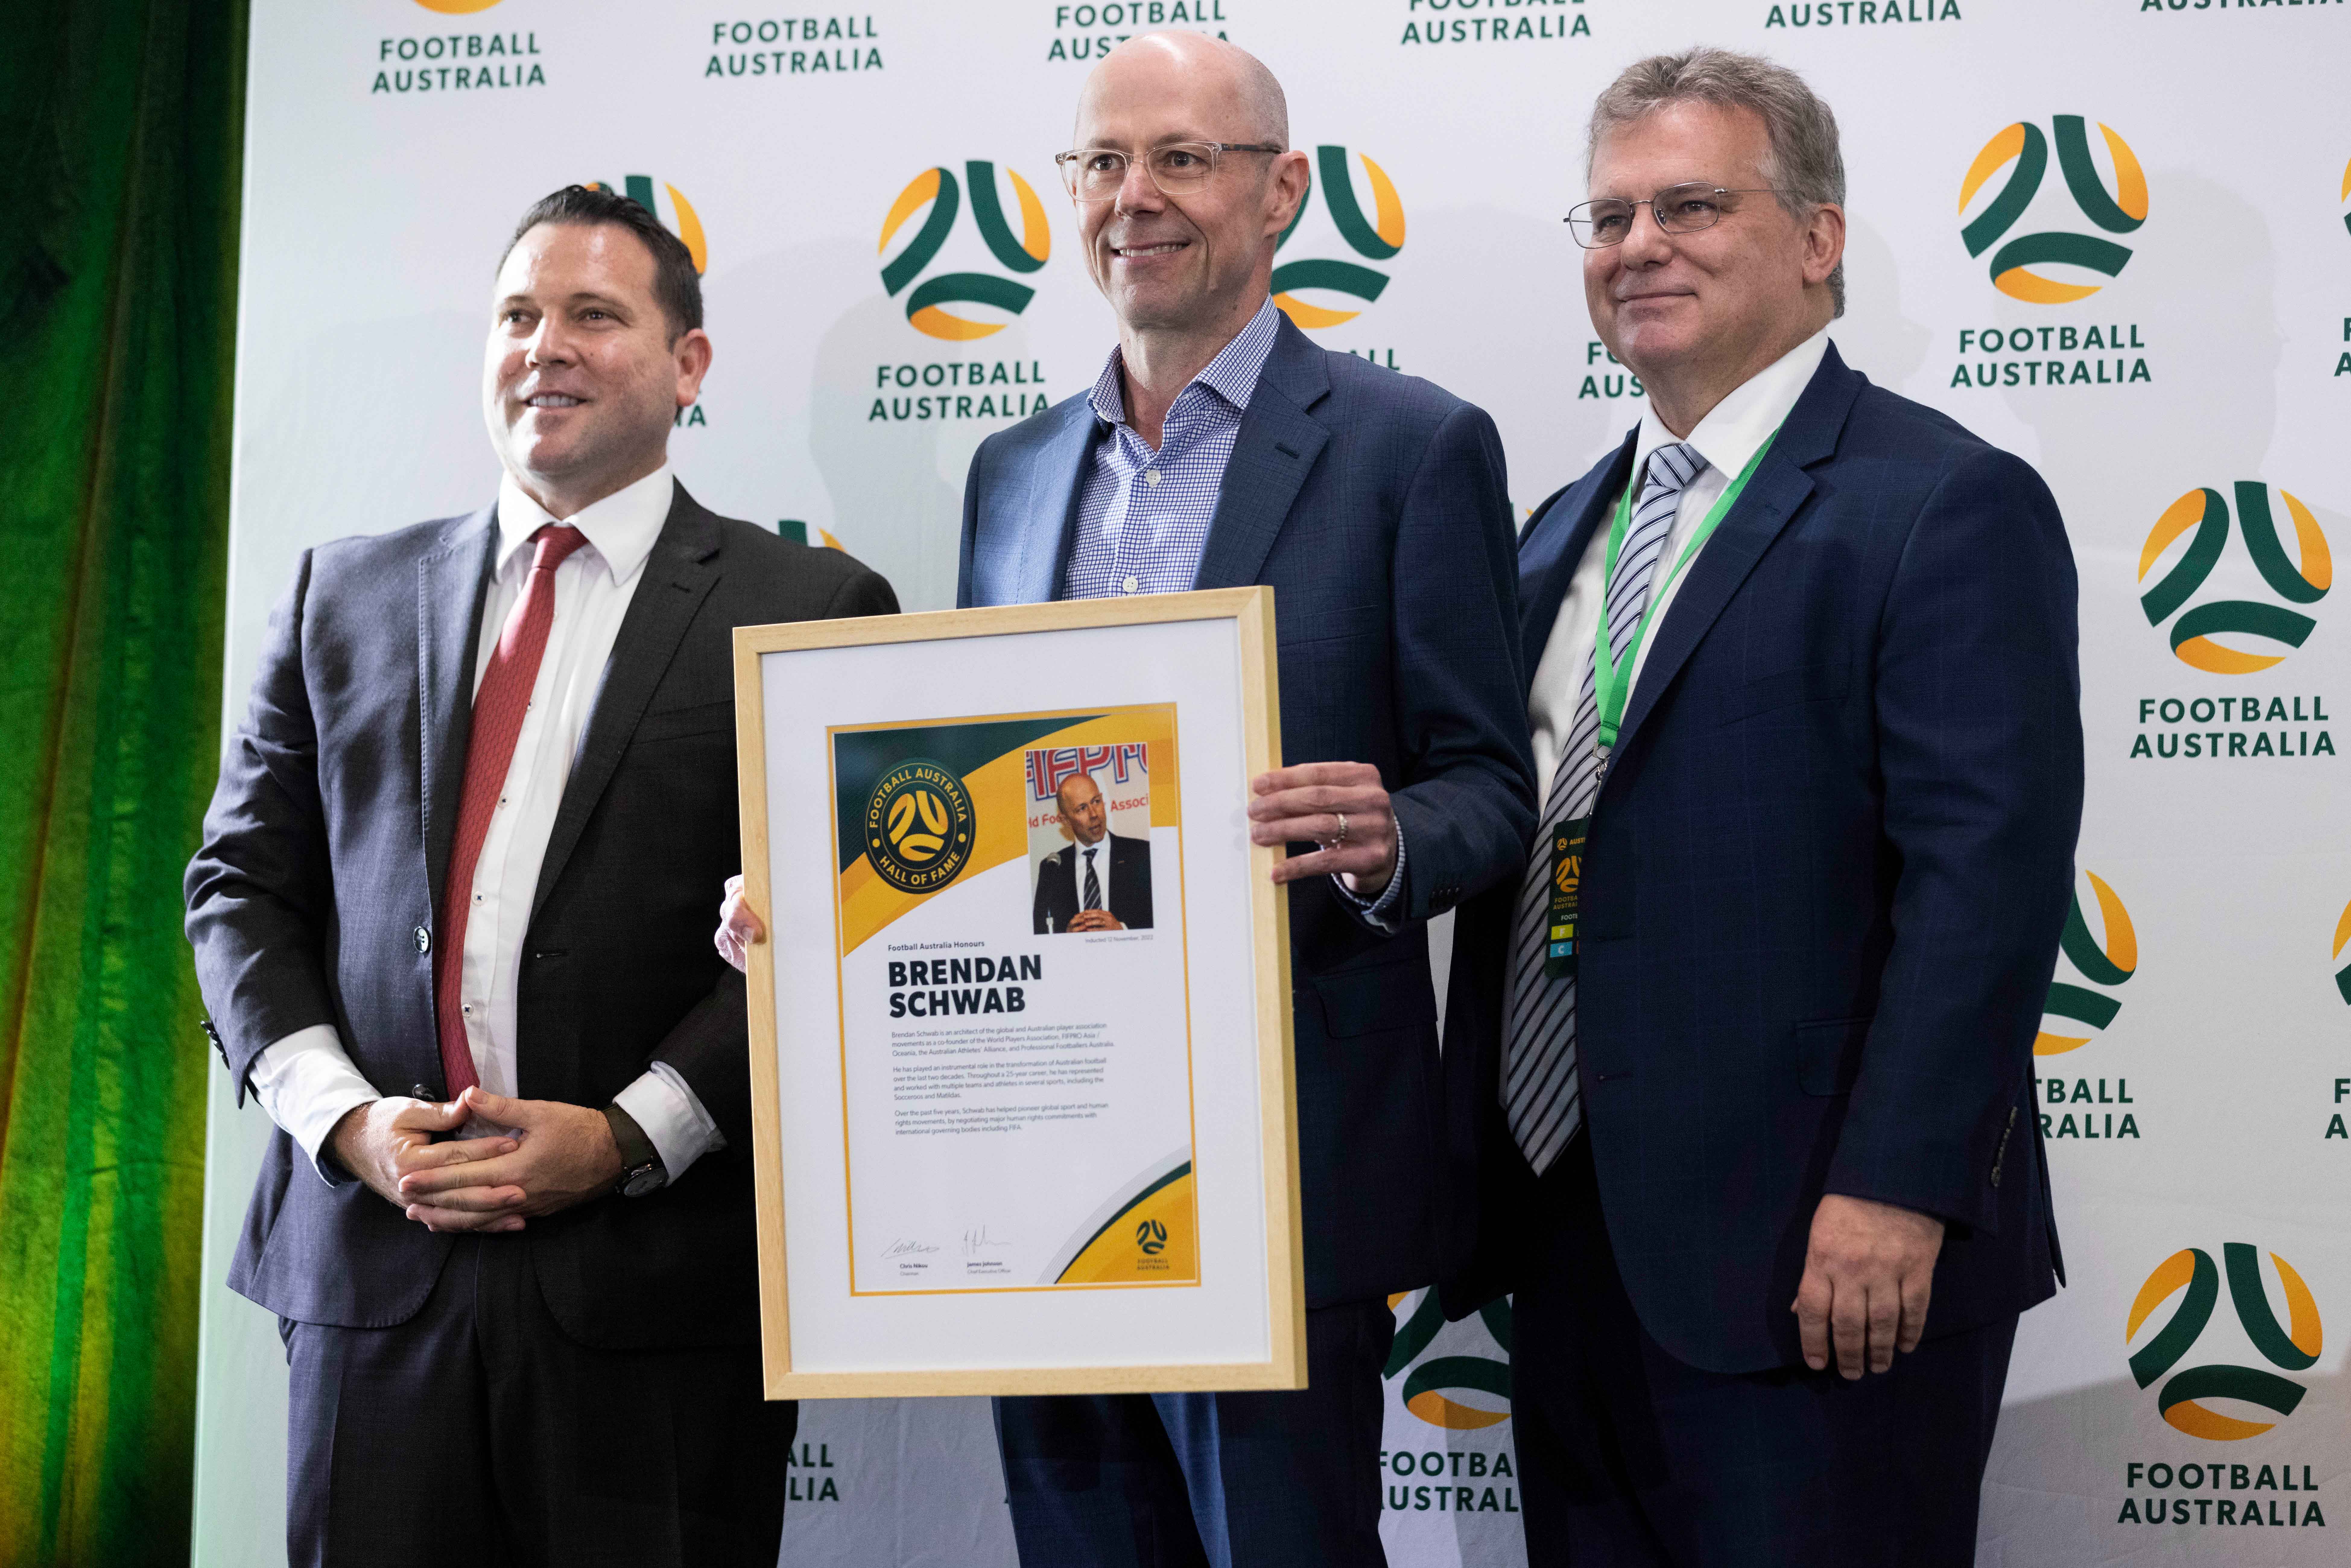 Brendan Schwab receiving his Football Australia Hall of Fame award, pictured with Football Australia CEO James Johnson and Football Australia Chair Chris Nikou. (Photo: Tiffany Williams/Football Australia)